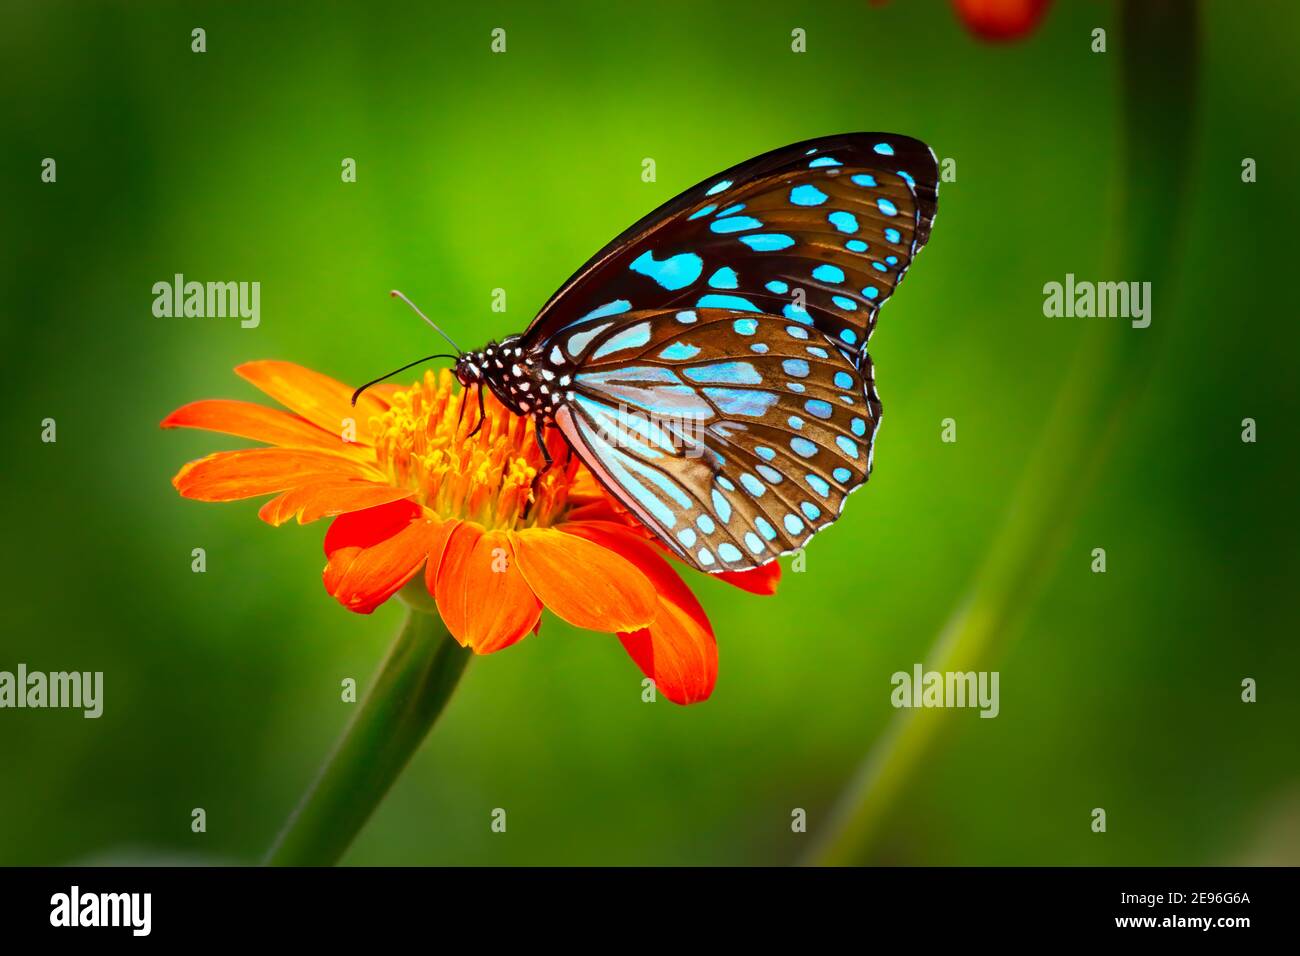 Mariposa Tigre azul o danaid Tirumala limniace sobre la flor de naranja el girasol rojo o el girasol mexicano (Tithonia rotundifolia, familia Asteraceae), w Foto de stock